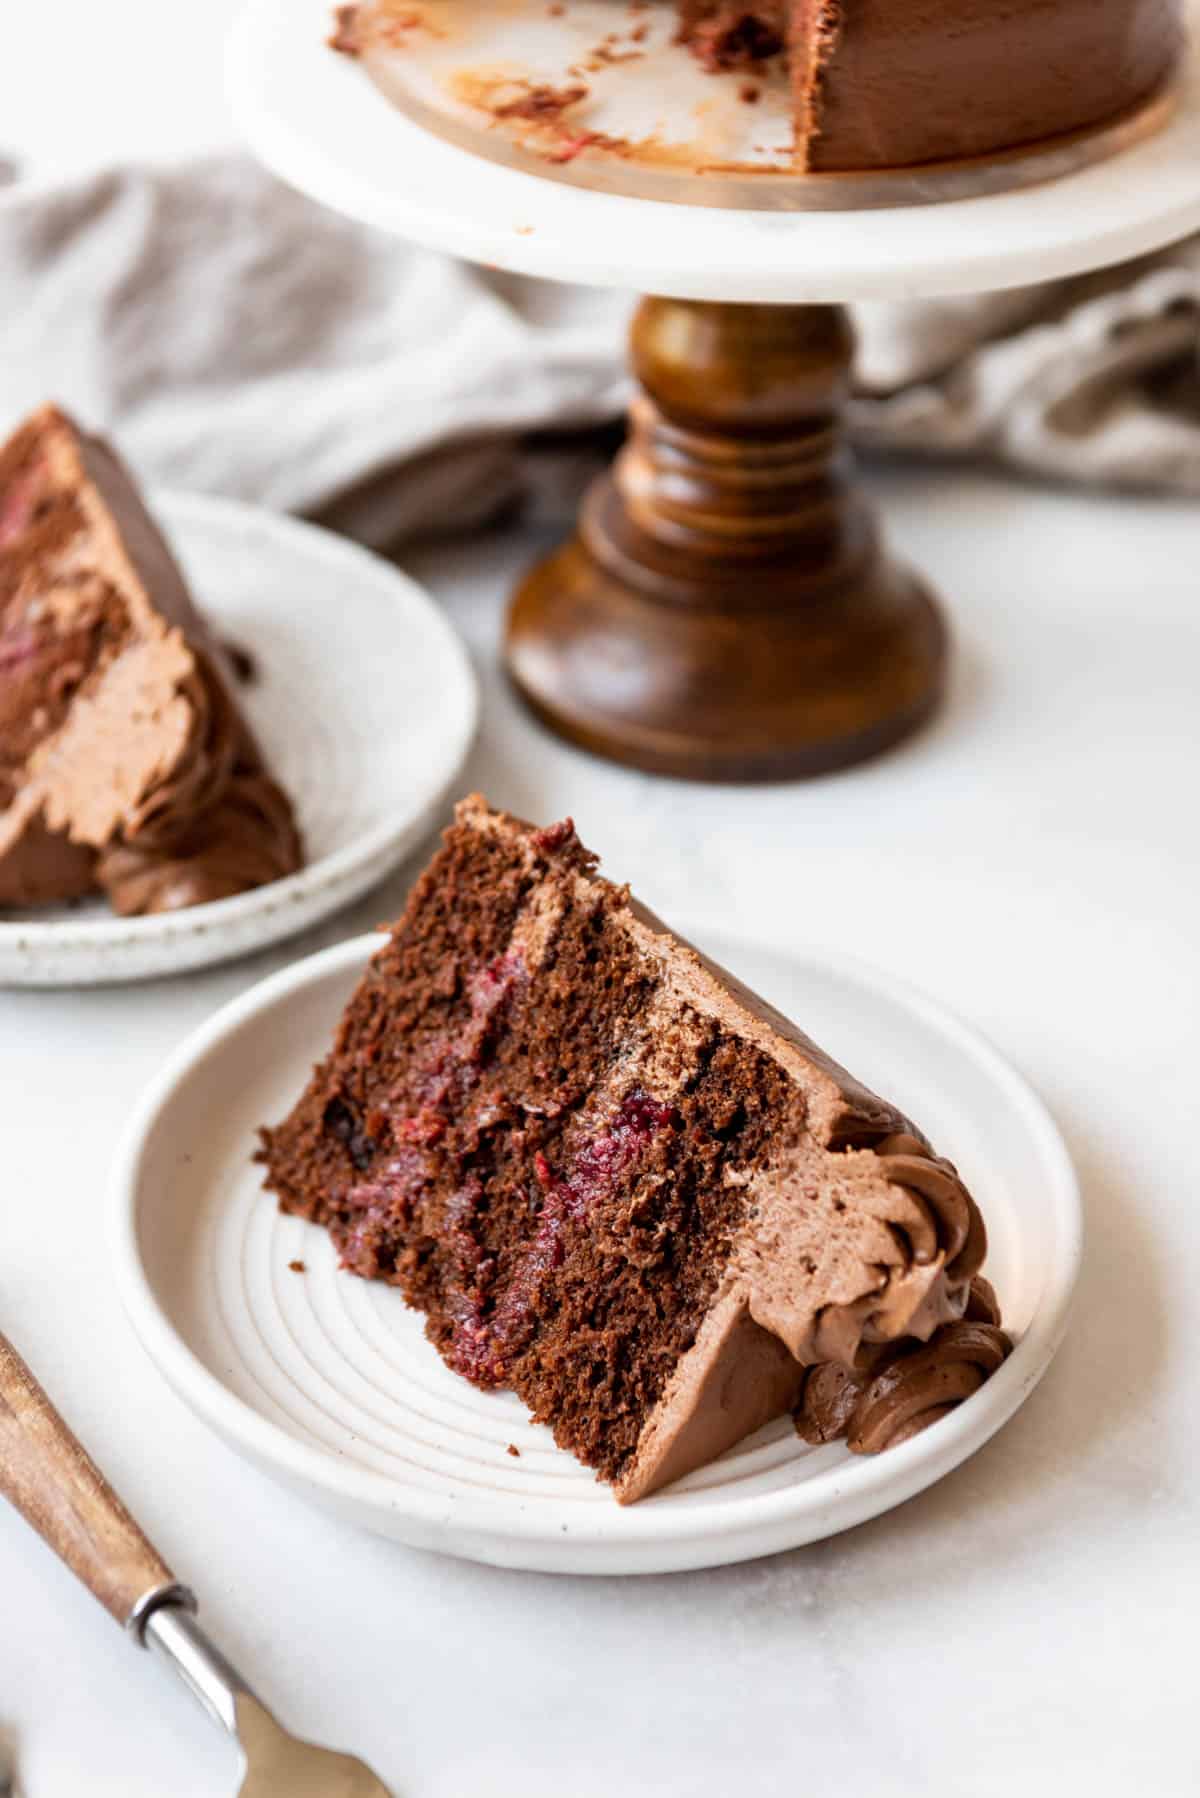 An image of a slice of homemade raspberry chocolate cake on a plate.